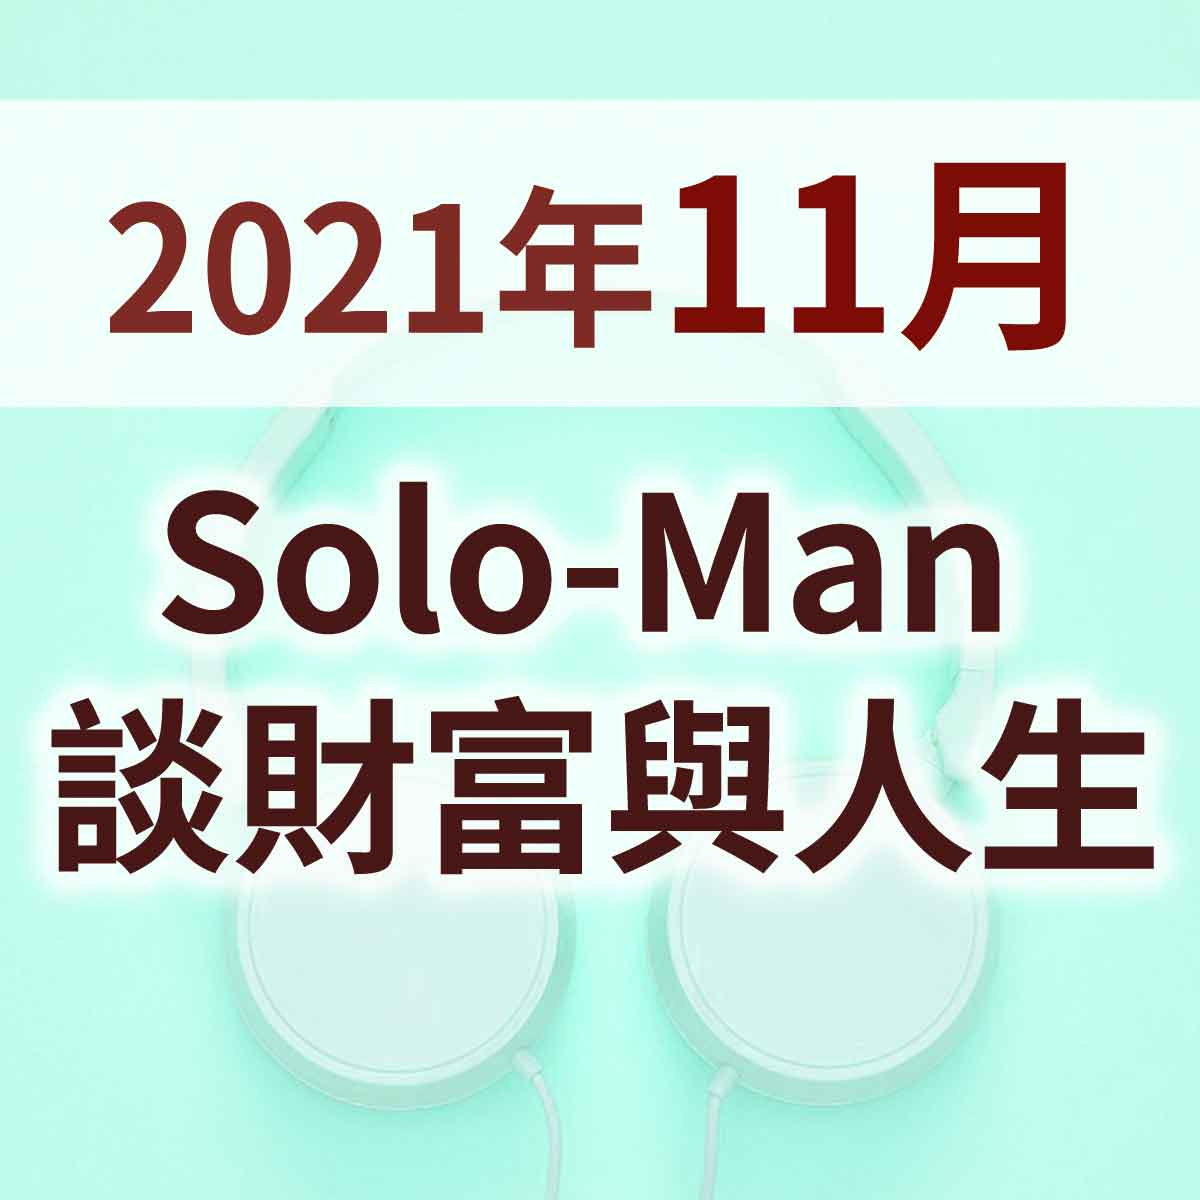 2021年11月 - 《Solo-Man 談財富與人生》主講人是Solo-Man 葉仁昌教授封面圖